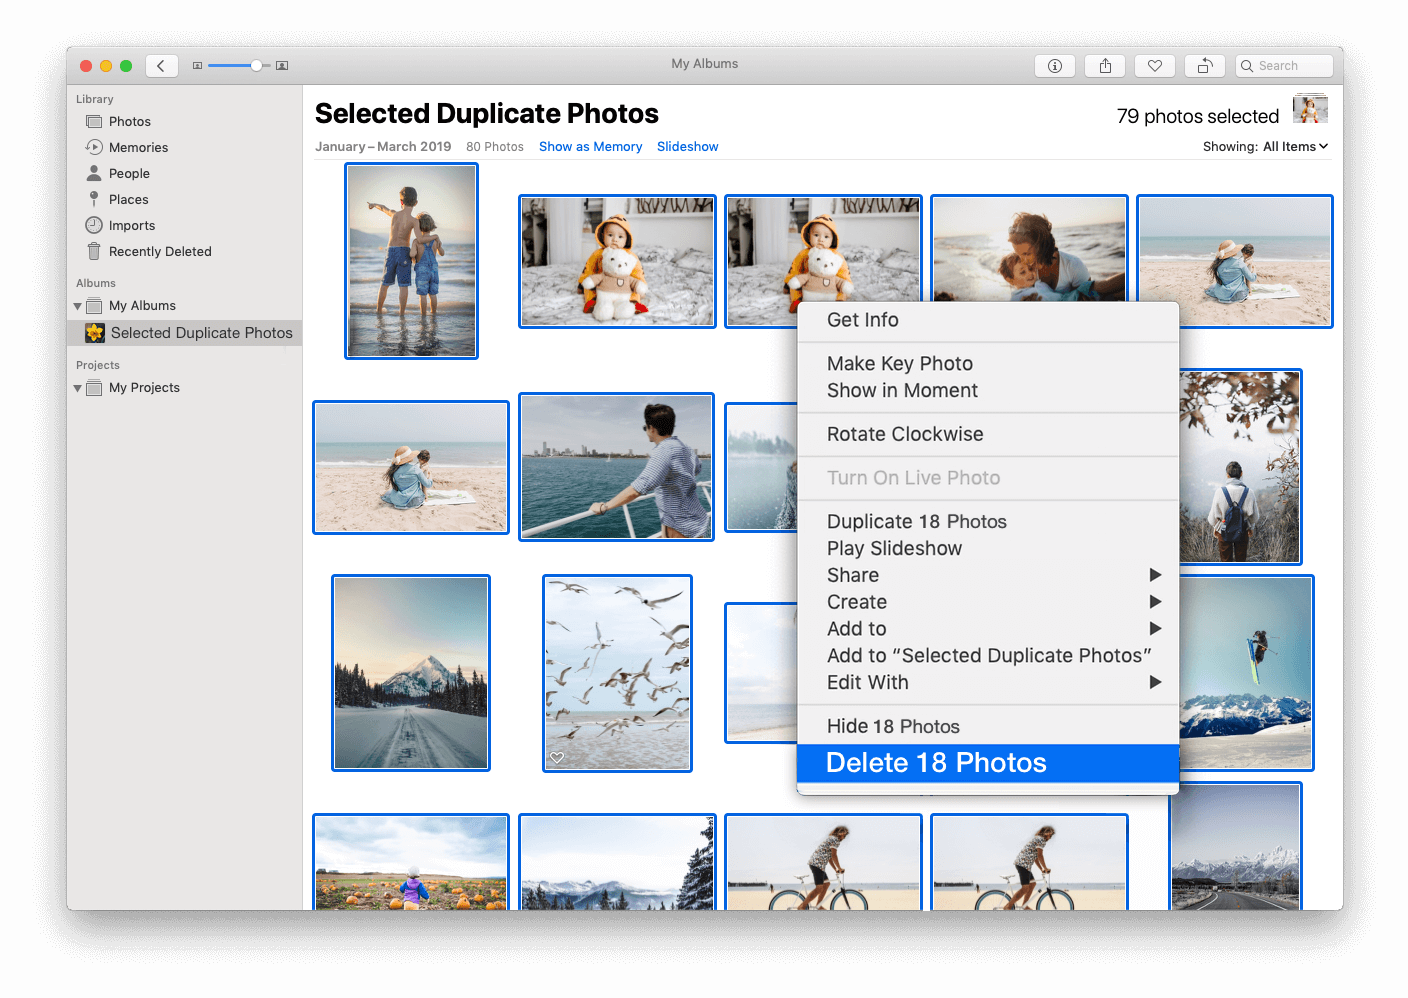 photos duplicate cleaner mac add album